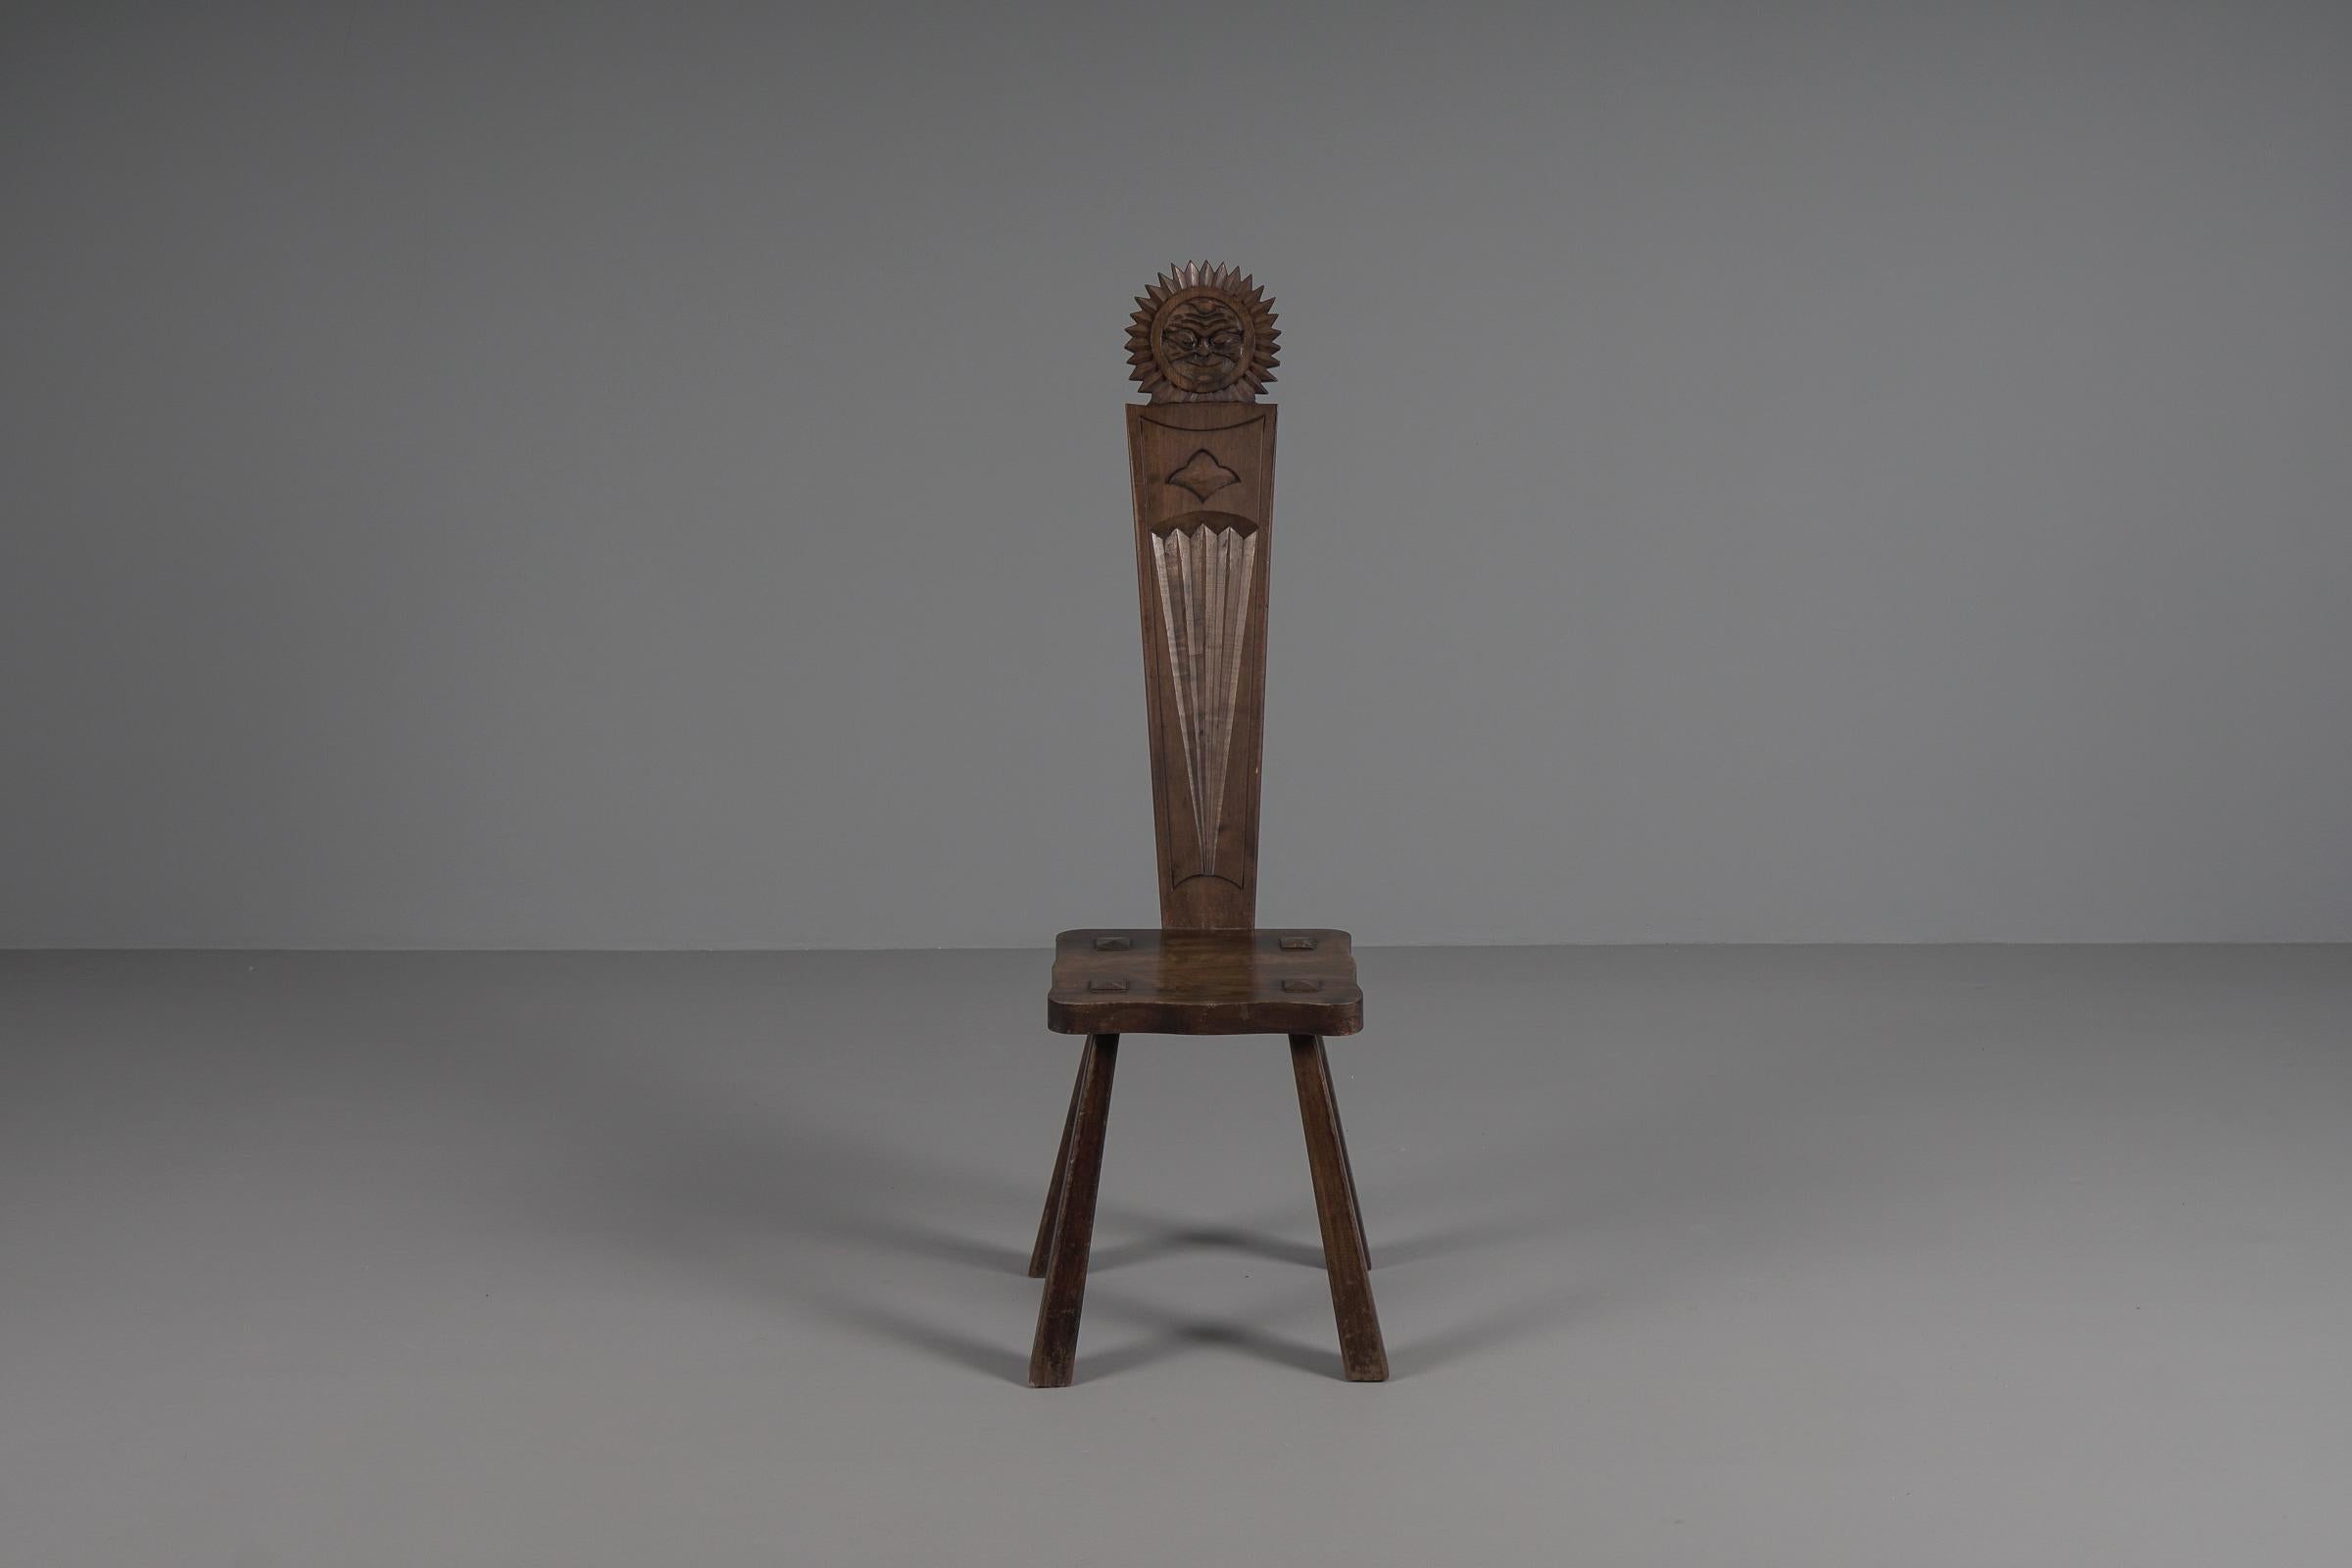 Wood Primitive Brutalist Modern Sun Sculptured Chair, 1950s, France